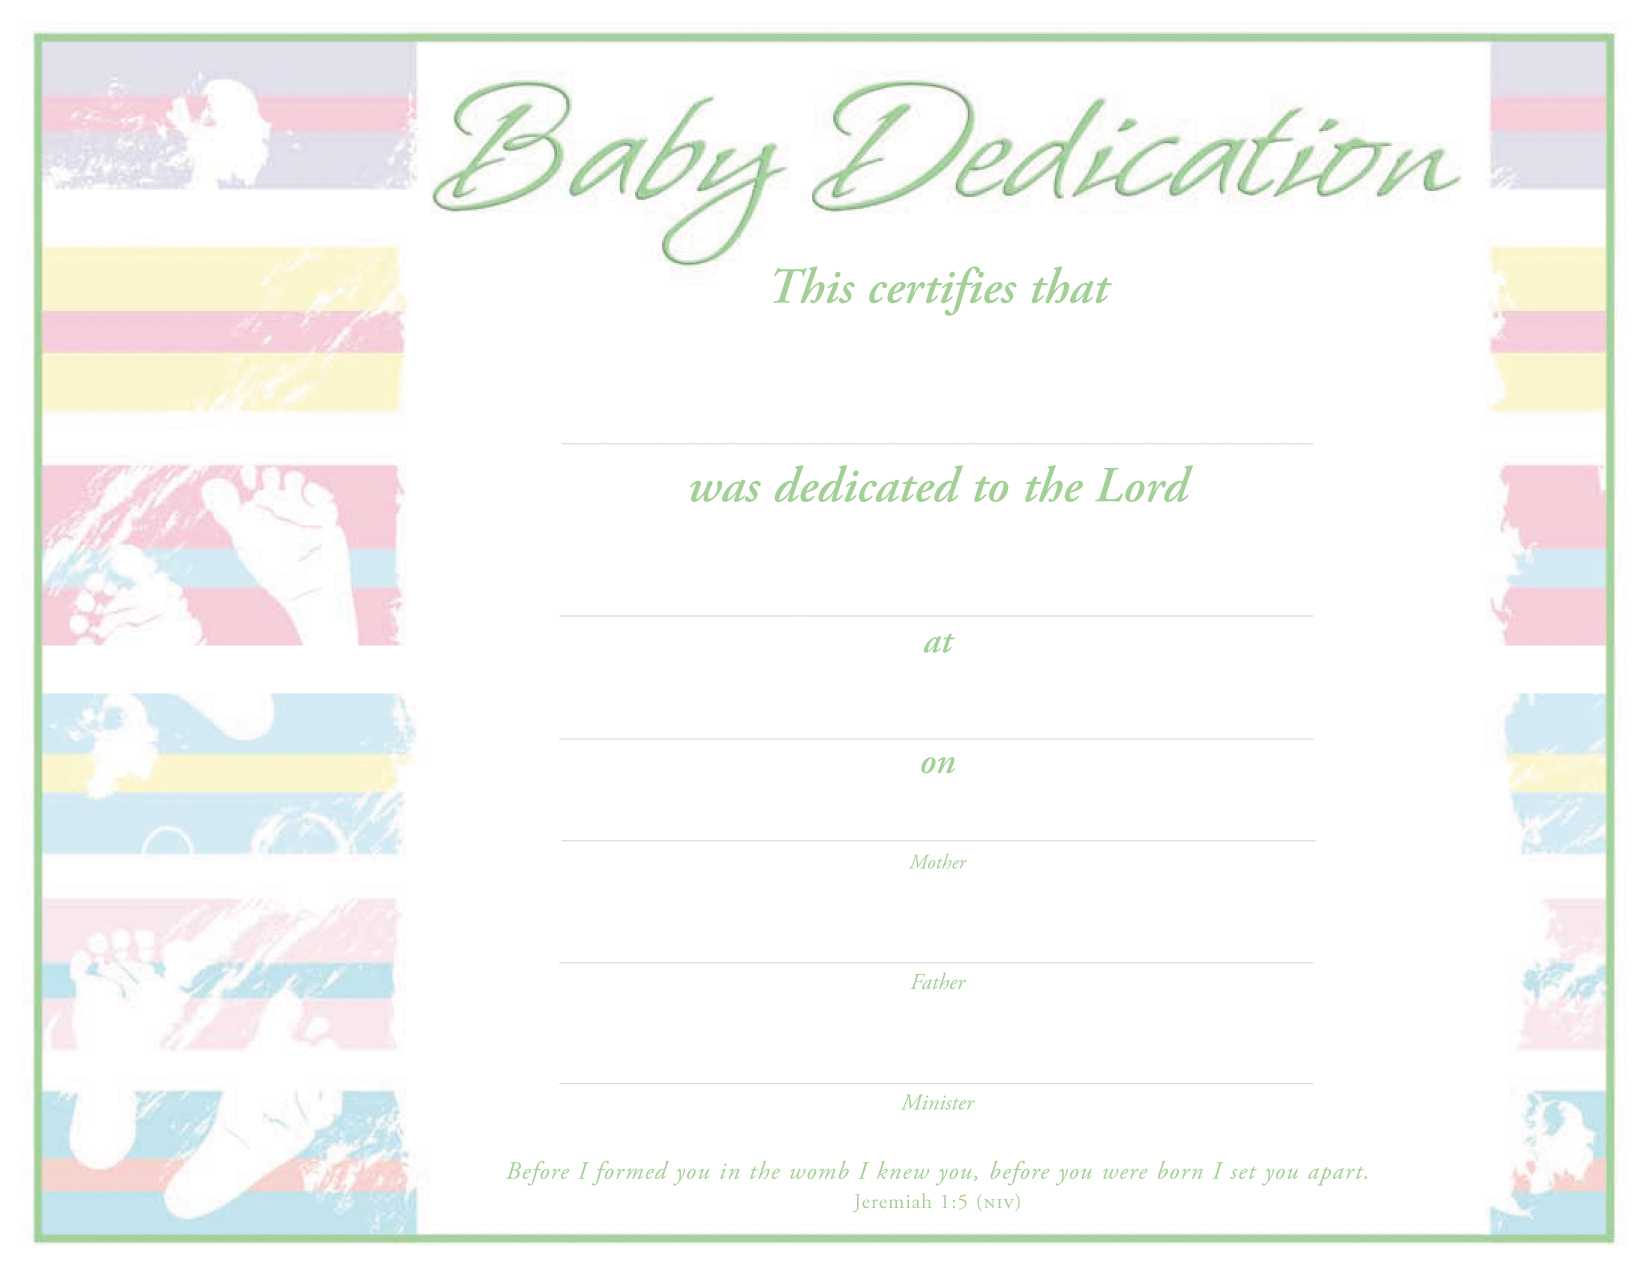 Baby Dedication Certificate – Certificate – Dedication Throughout Baby Dedication Certificate Template